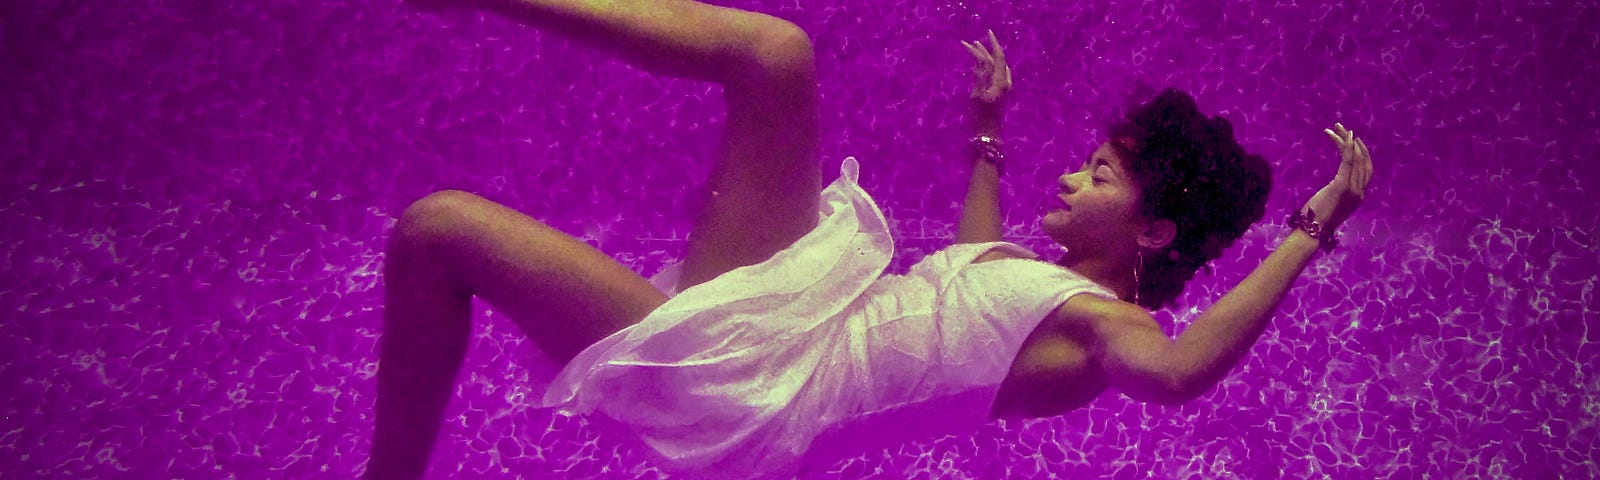 A woman falling, on a purple background.